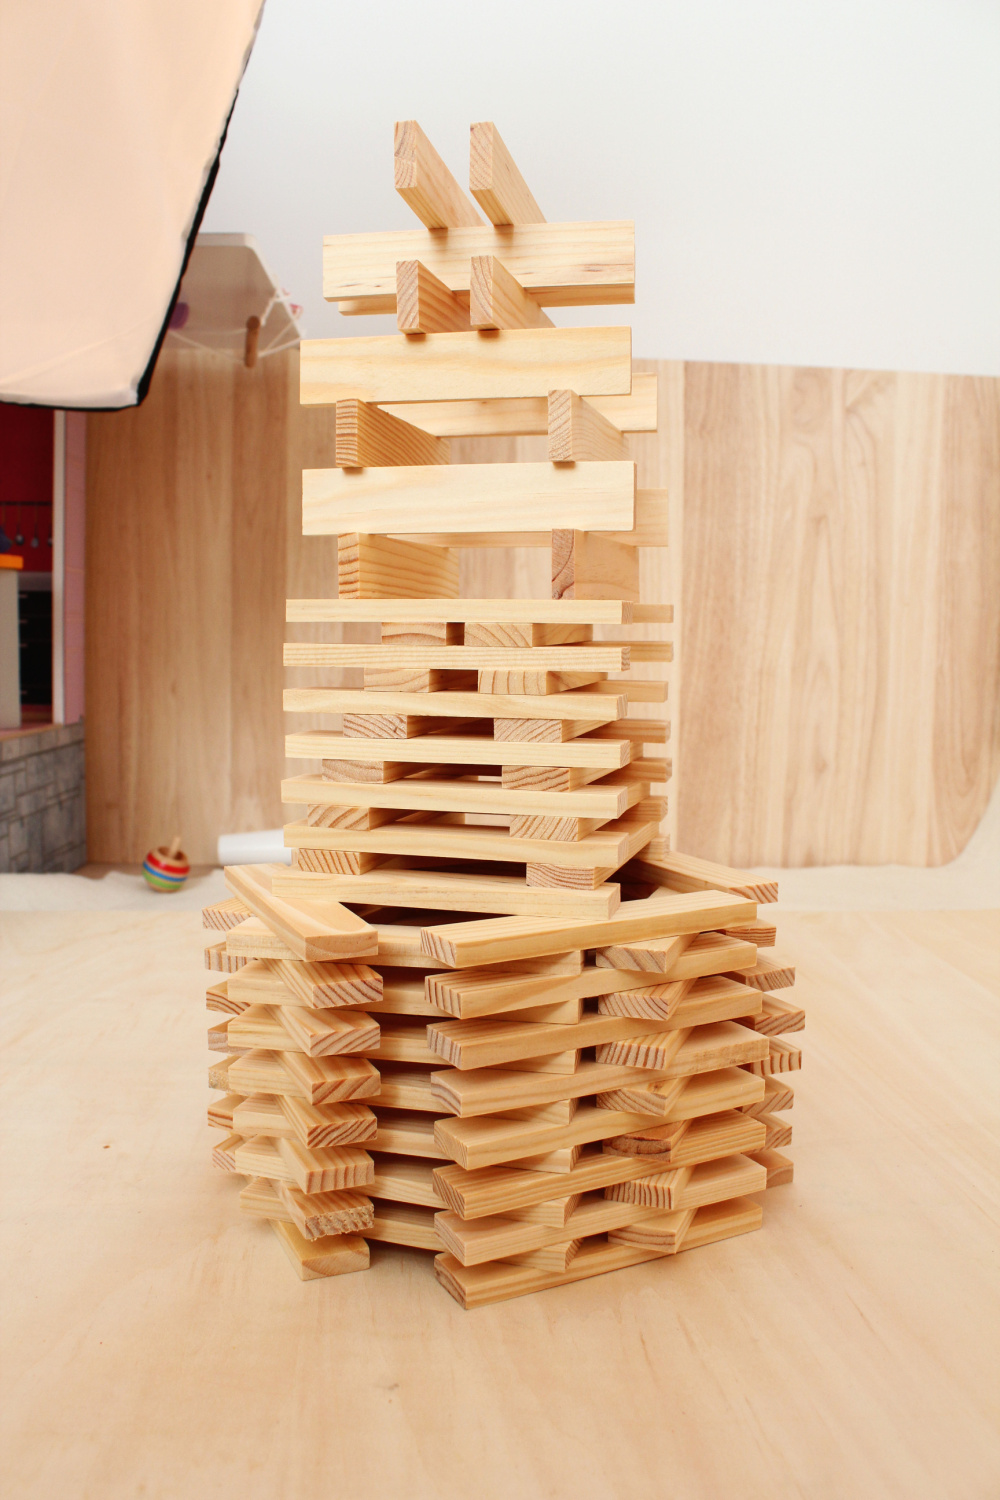 Natural wooden blocks set